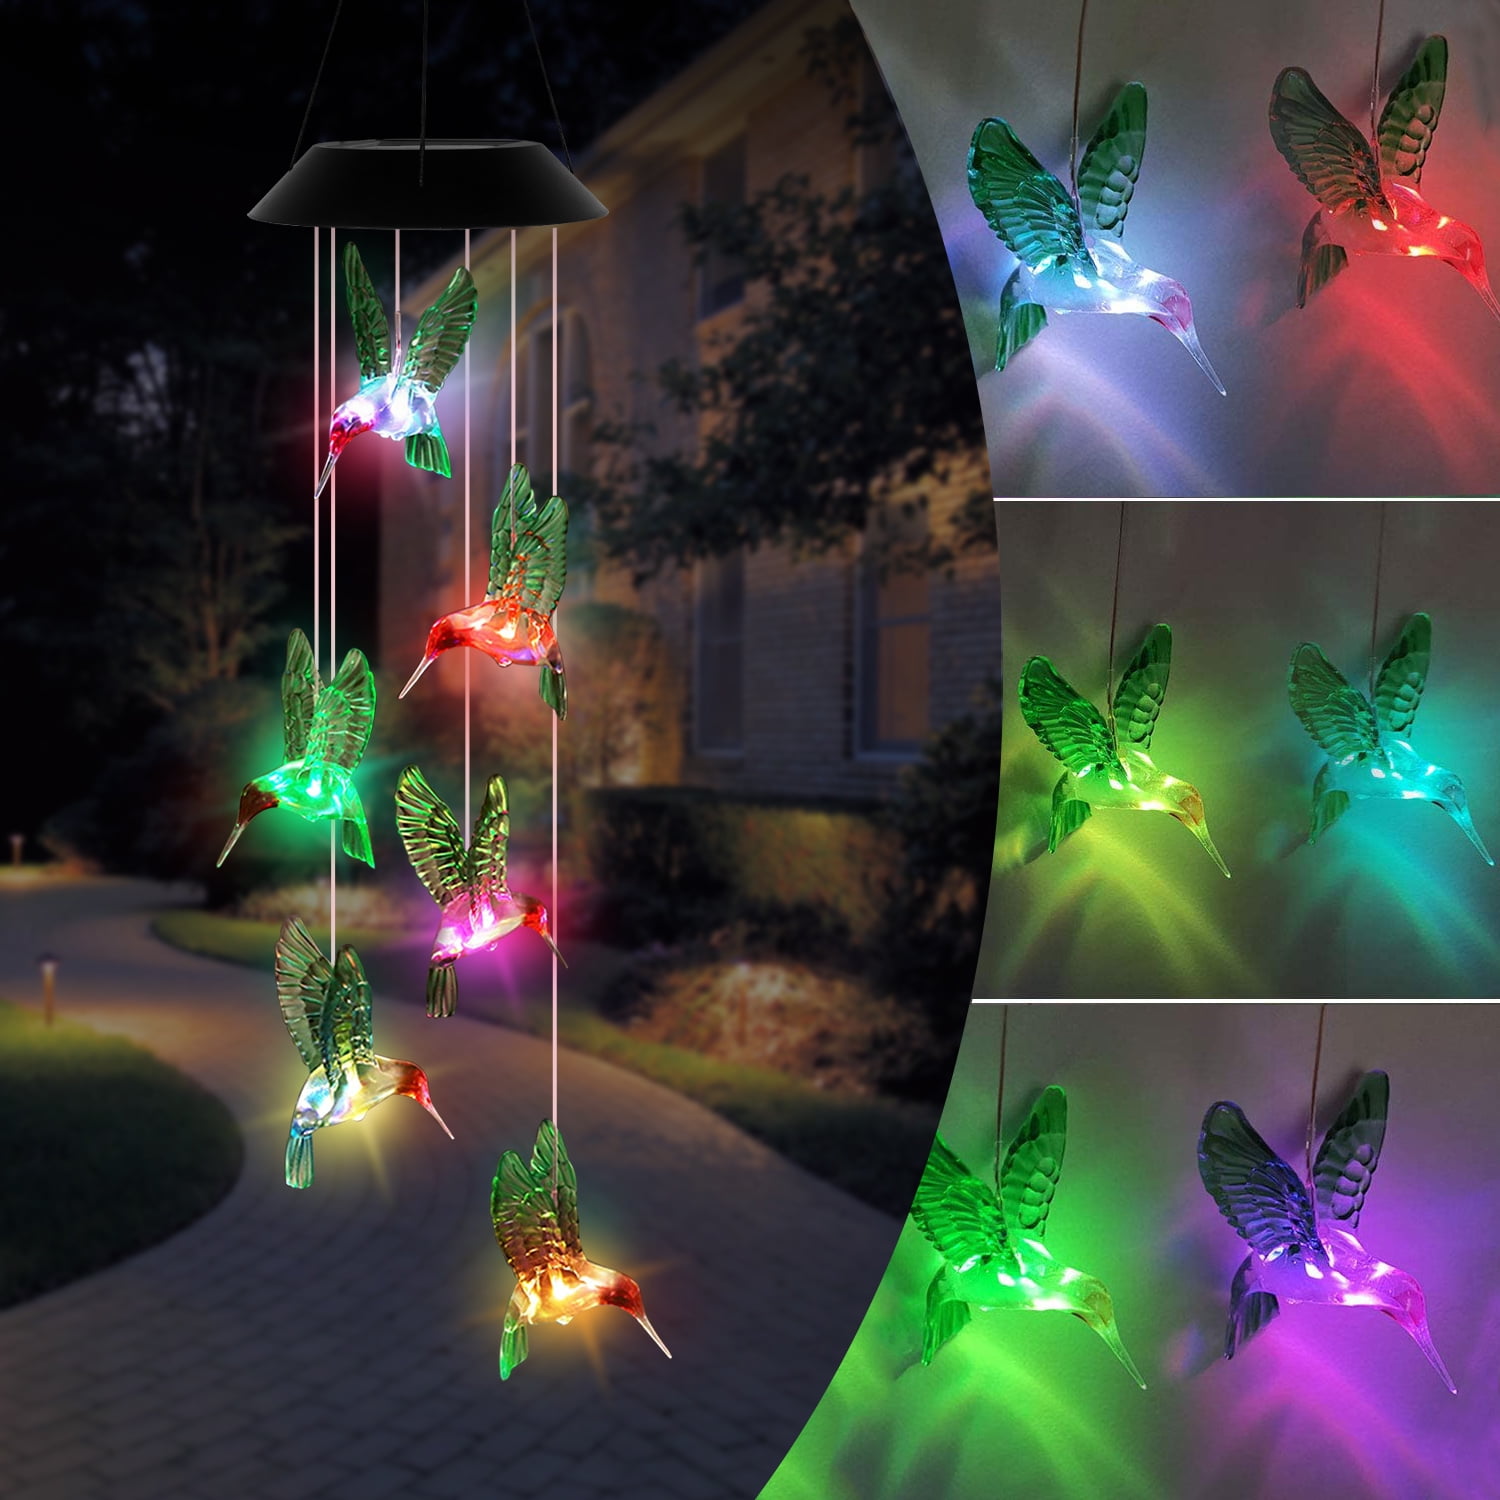 Solar Lantern Outdoor Hanging Lights Waterproof Decorative Lanterns Hummingbird Lights LED Lights Lamps for Garden Outdoor Patio Decor